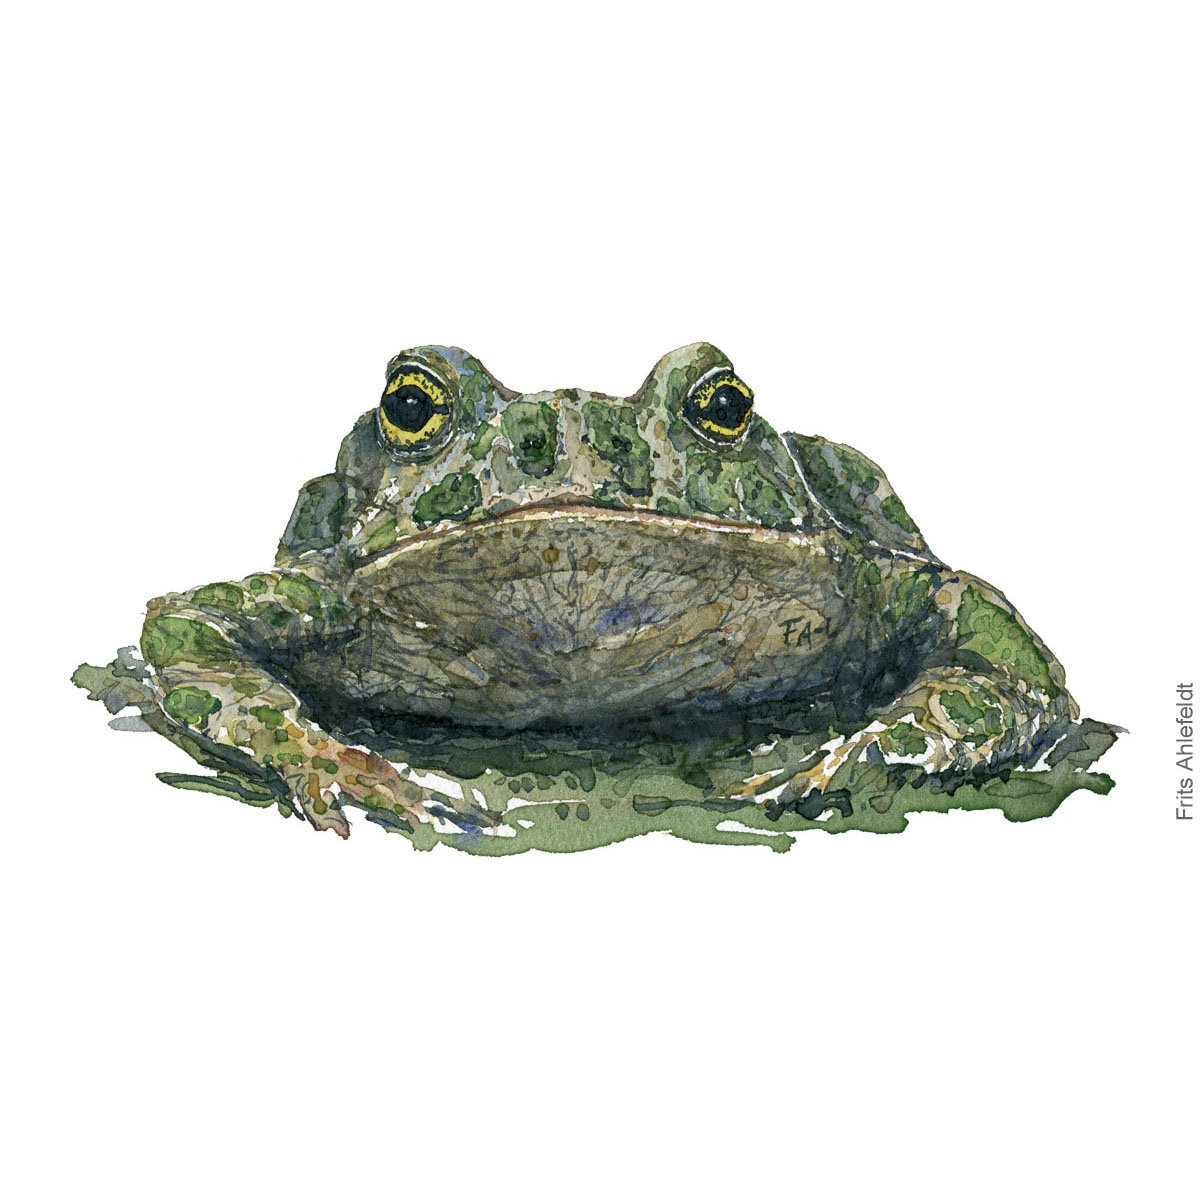 green-toad-bufo-viridis-groenbroget-tudse-frits-ahlefeldt watercolor - akvare